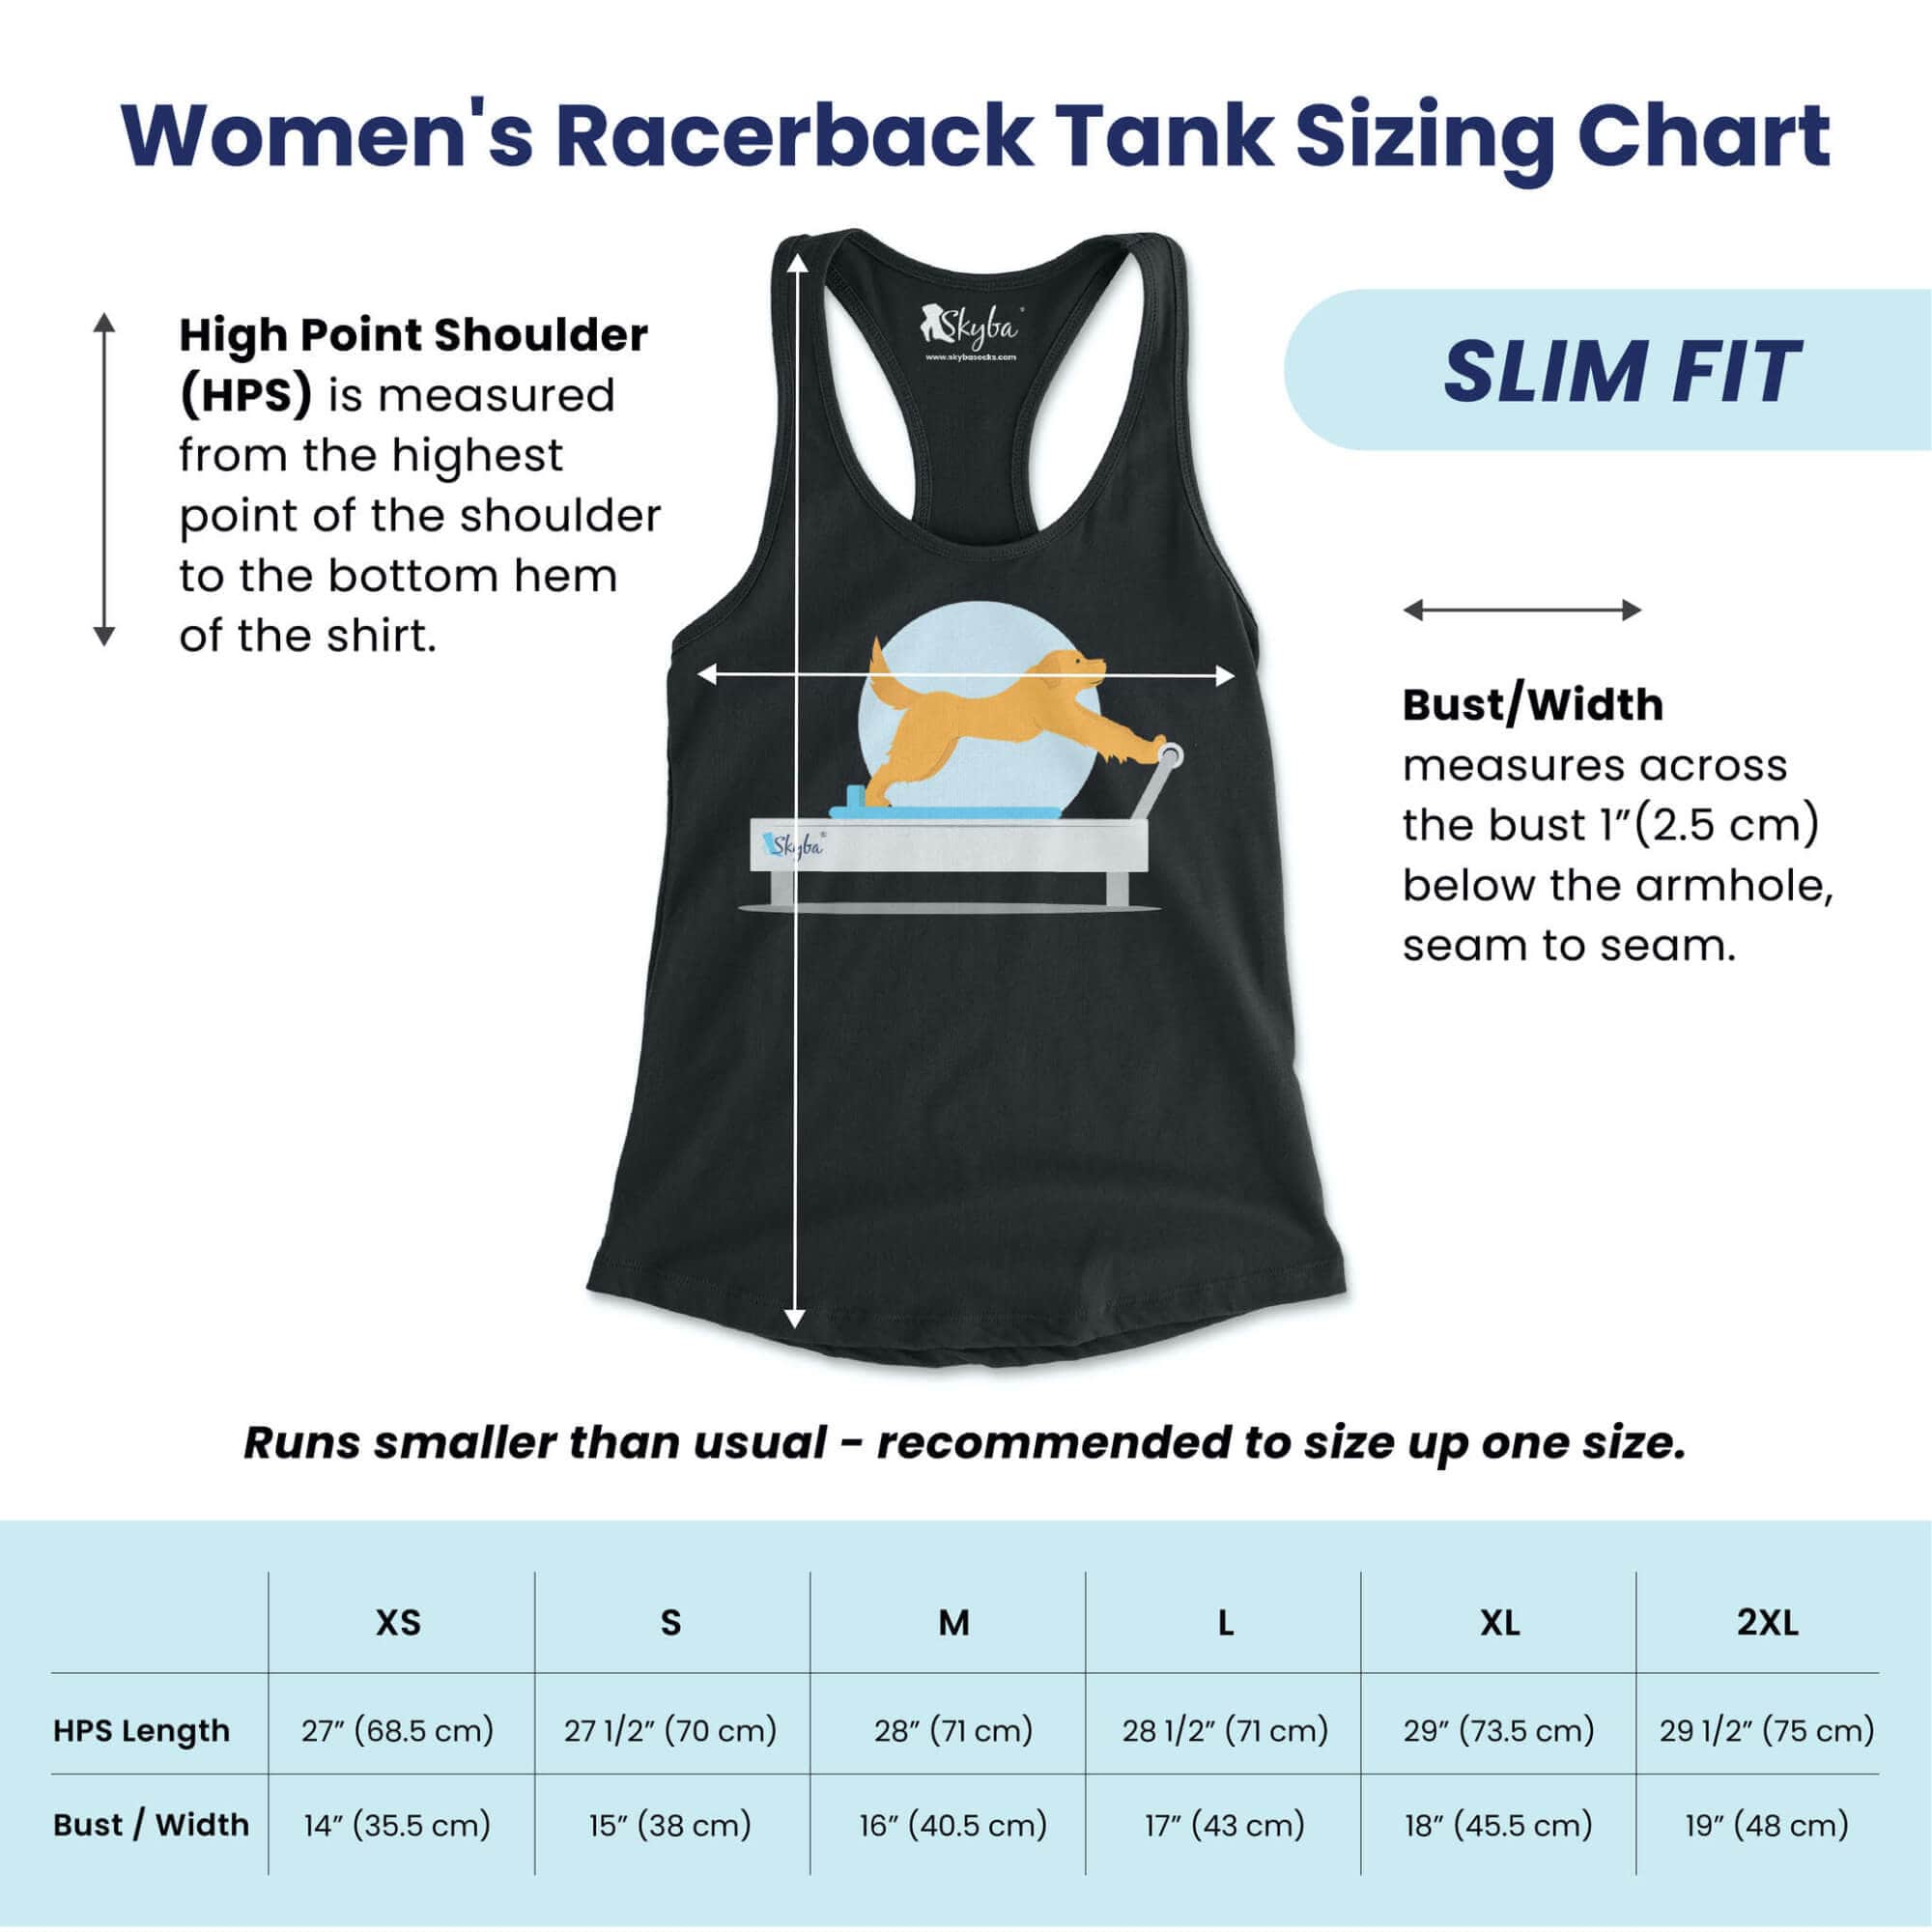 Pilates Lover - Women's Slim Fit Tank Skyba Tank Top